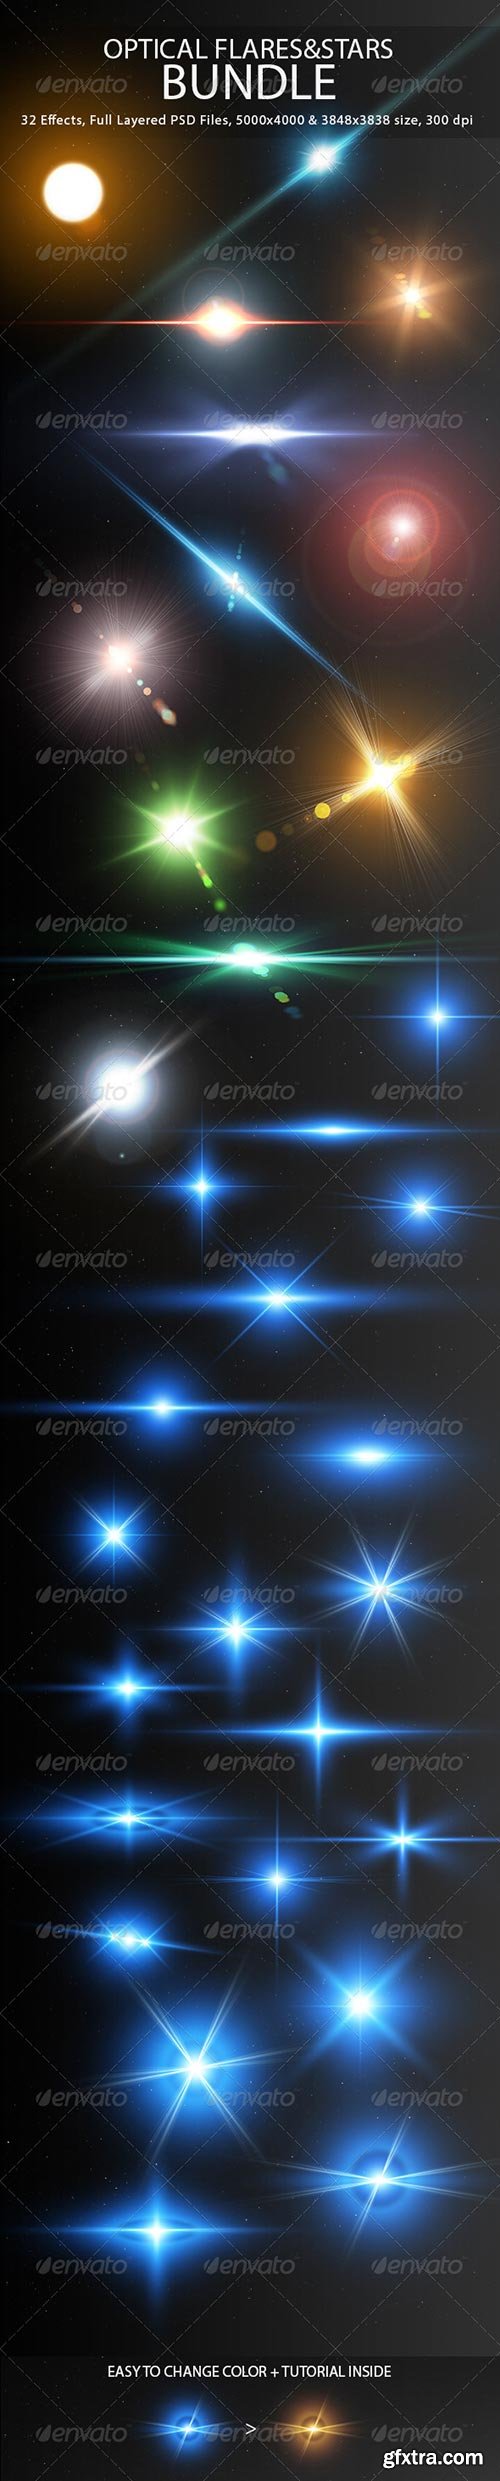 GraphicRiver - Optical Flares&Stars Bundle